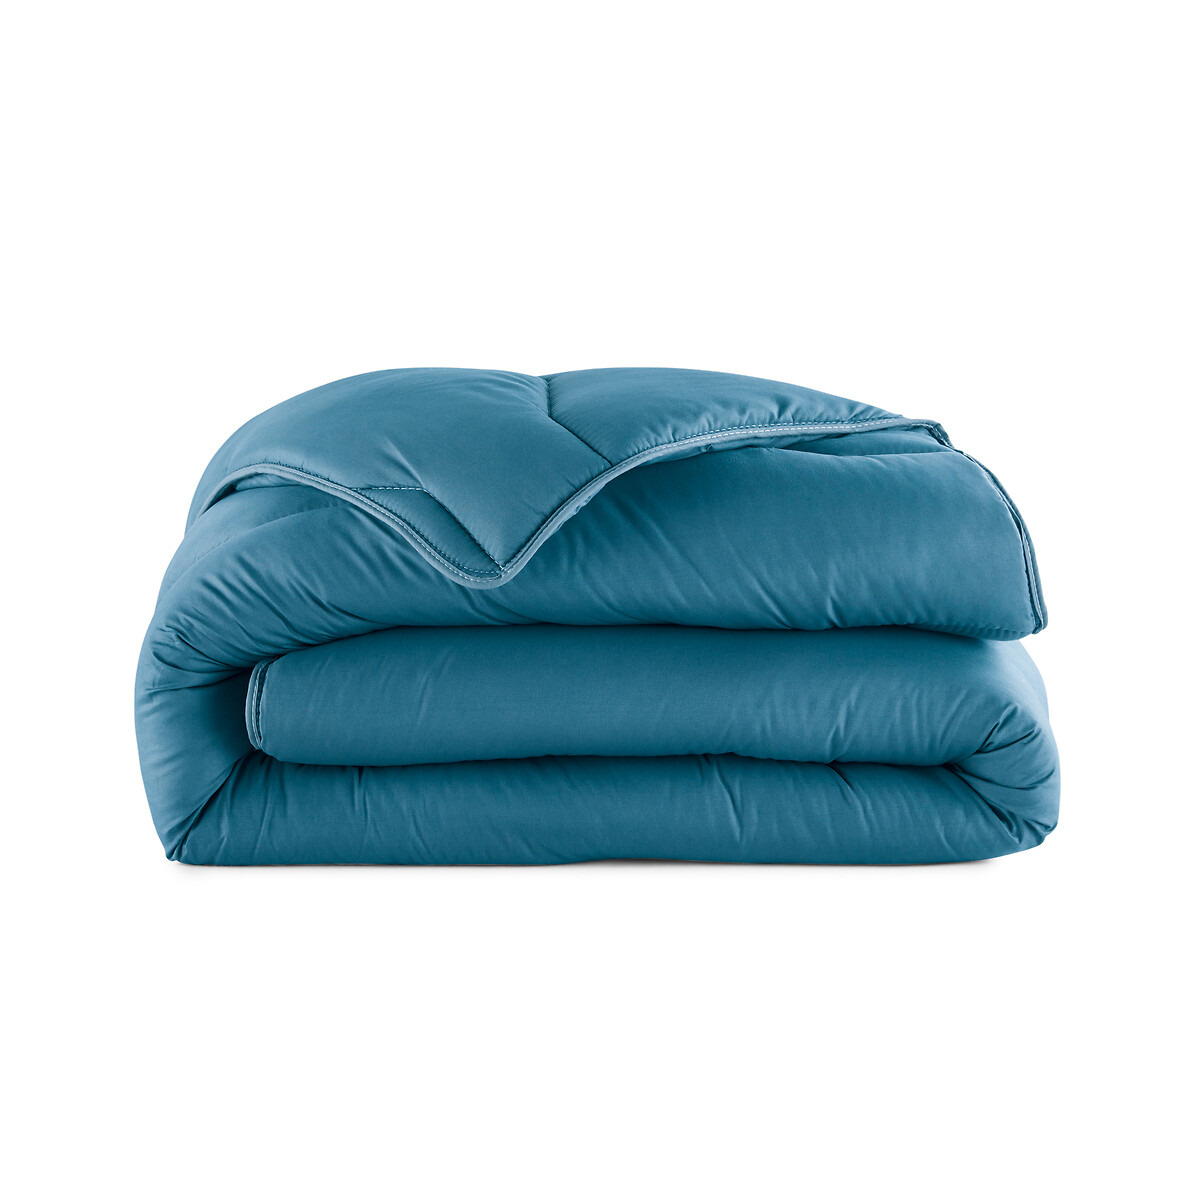 Одеяло LA REDOUTE INTERIEURS 100 полиэстер качество стандарт 300 гм 140 x 200 см синий, размер 140 x 200 см - фото 2